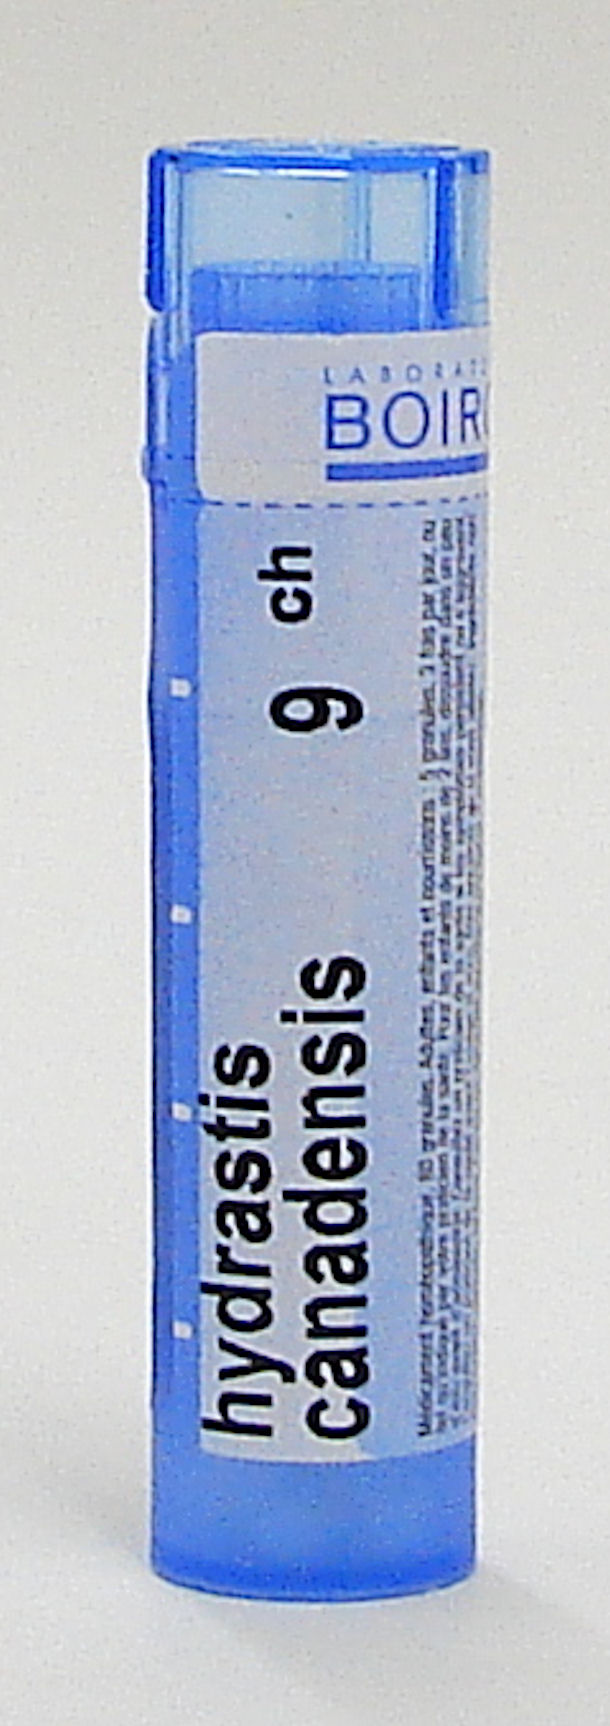 hydrastis canadensis 9ch sublingual pellets (boiron)